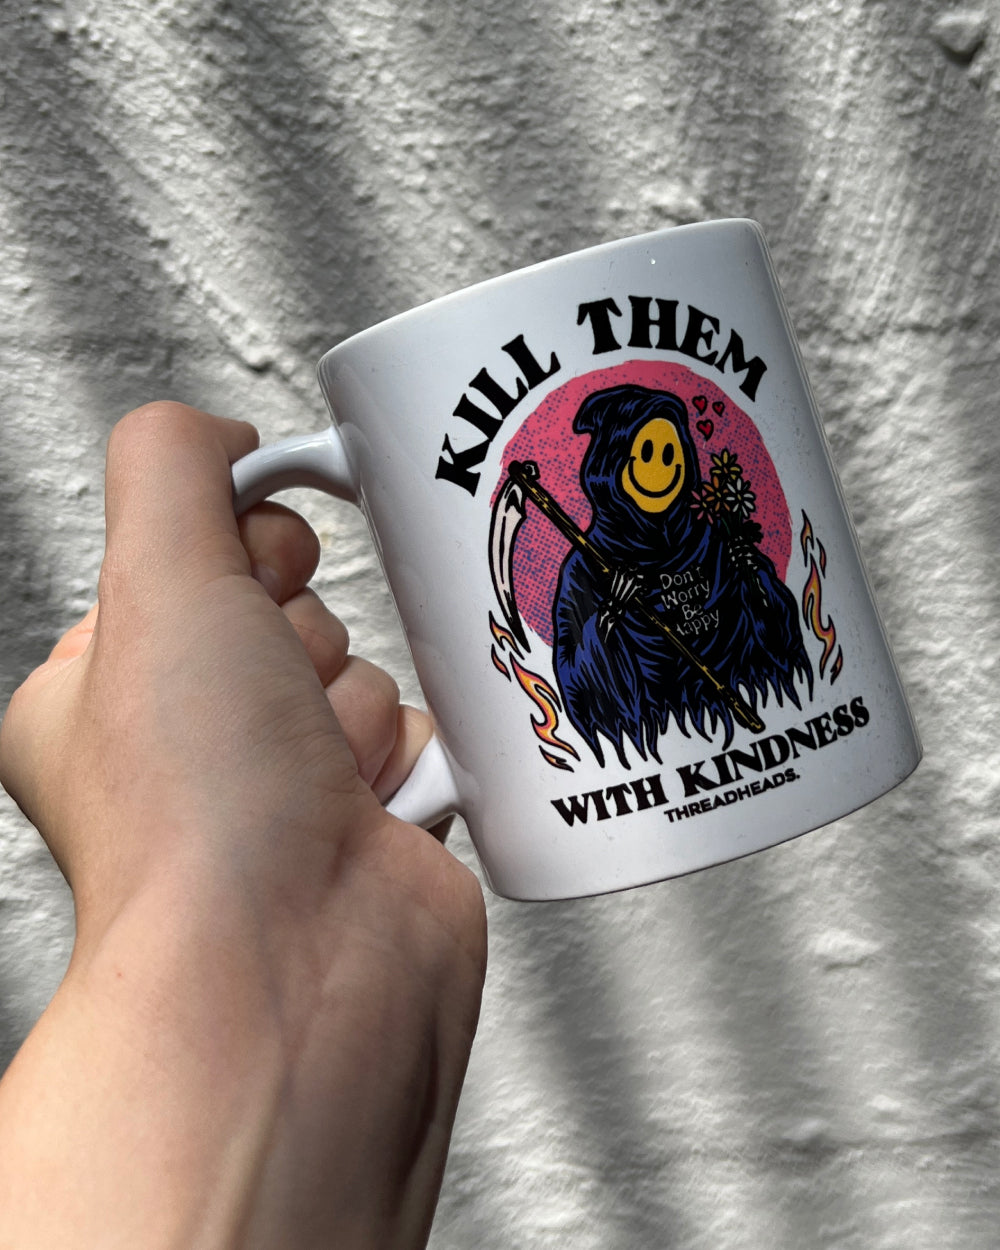 Kill Them With Kindness Mug | Threadheads